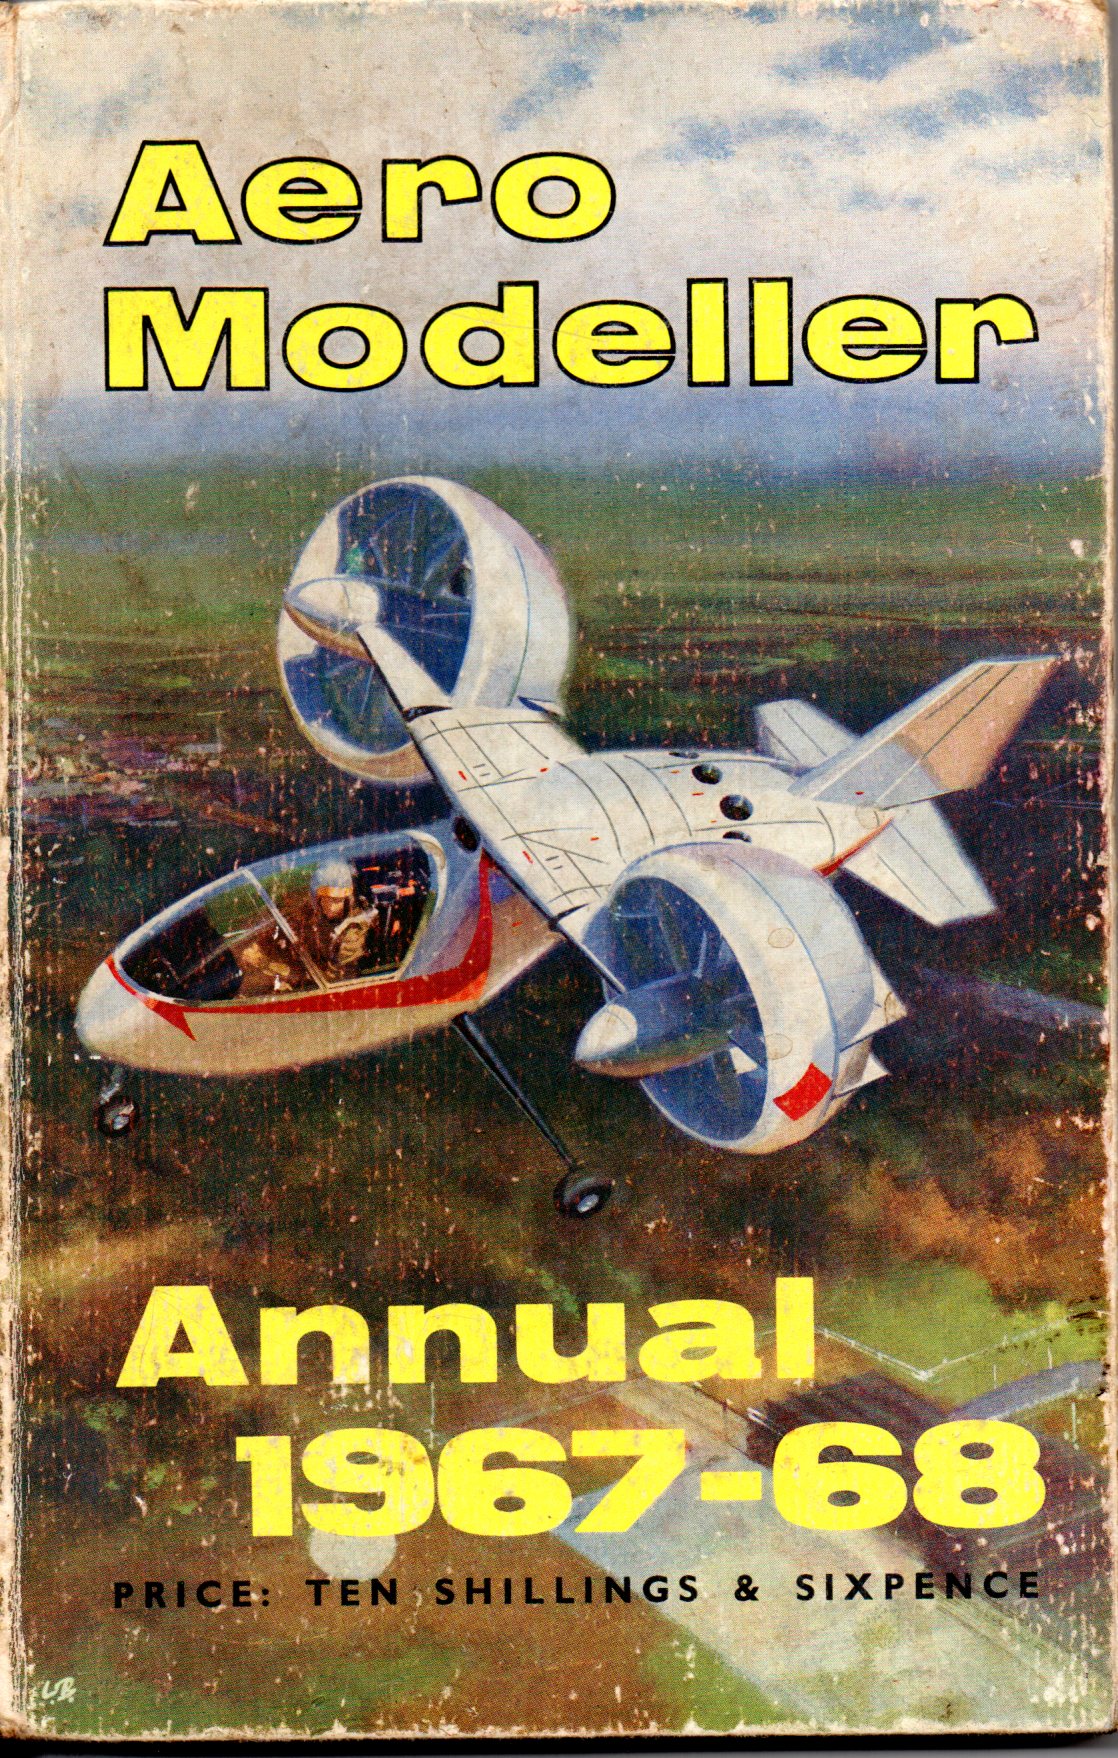 Aeromodeller Annual 1967-68 by DJ Laidlaw-Dickson and R G Moulton